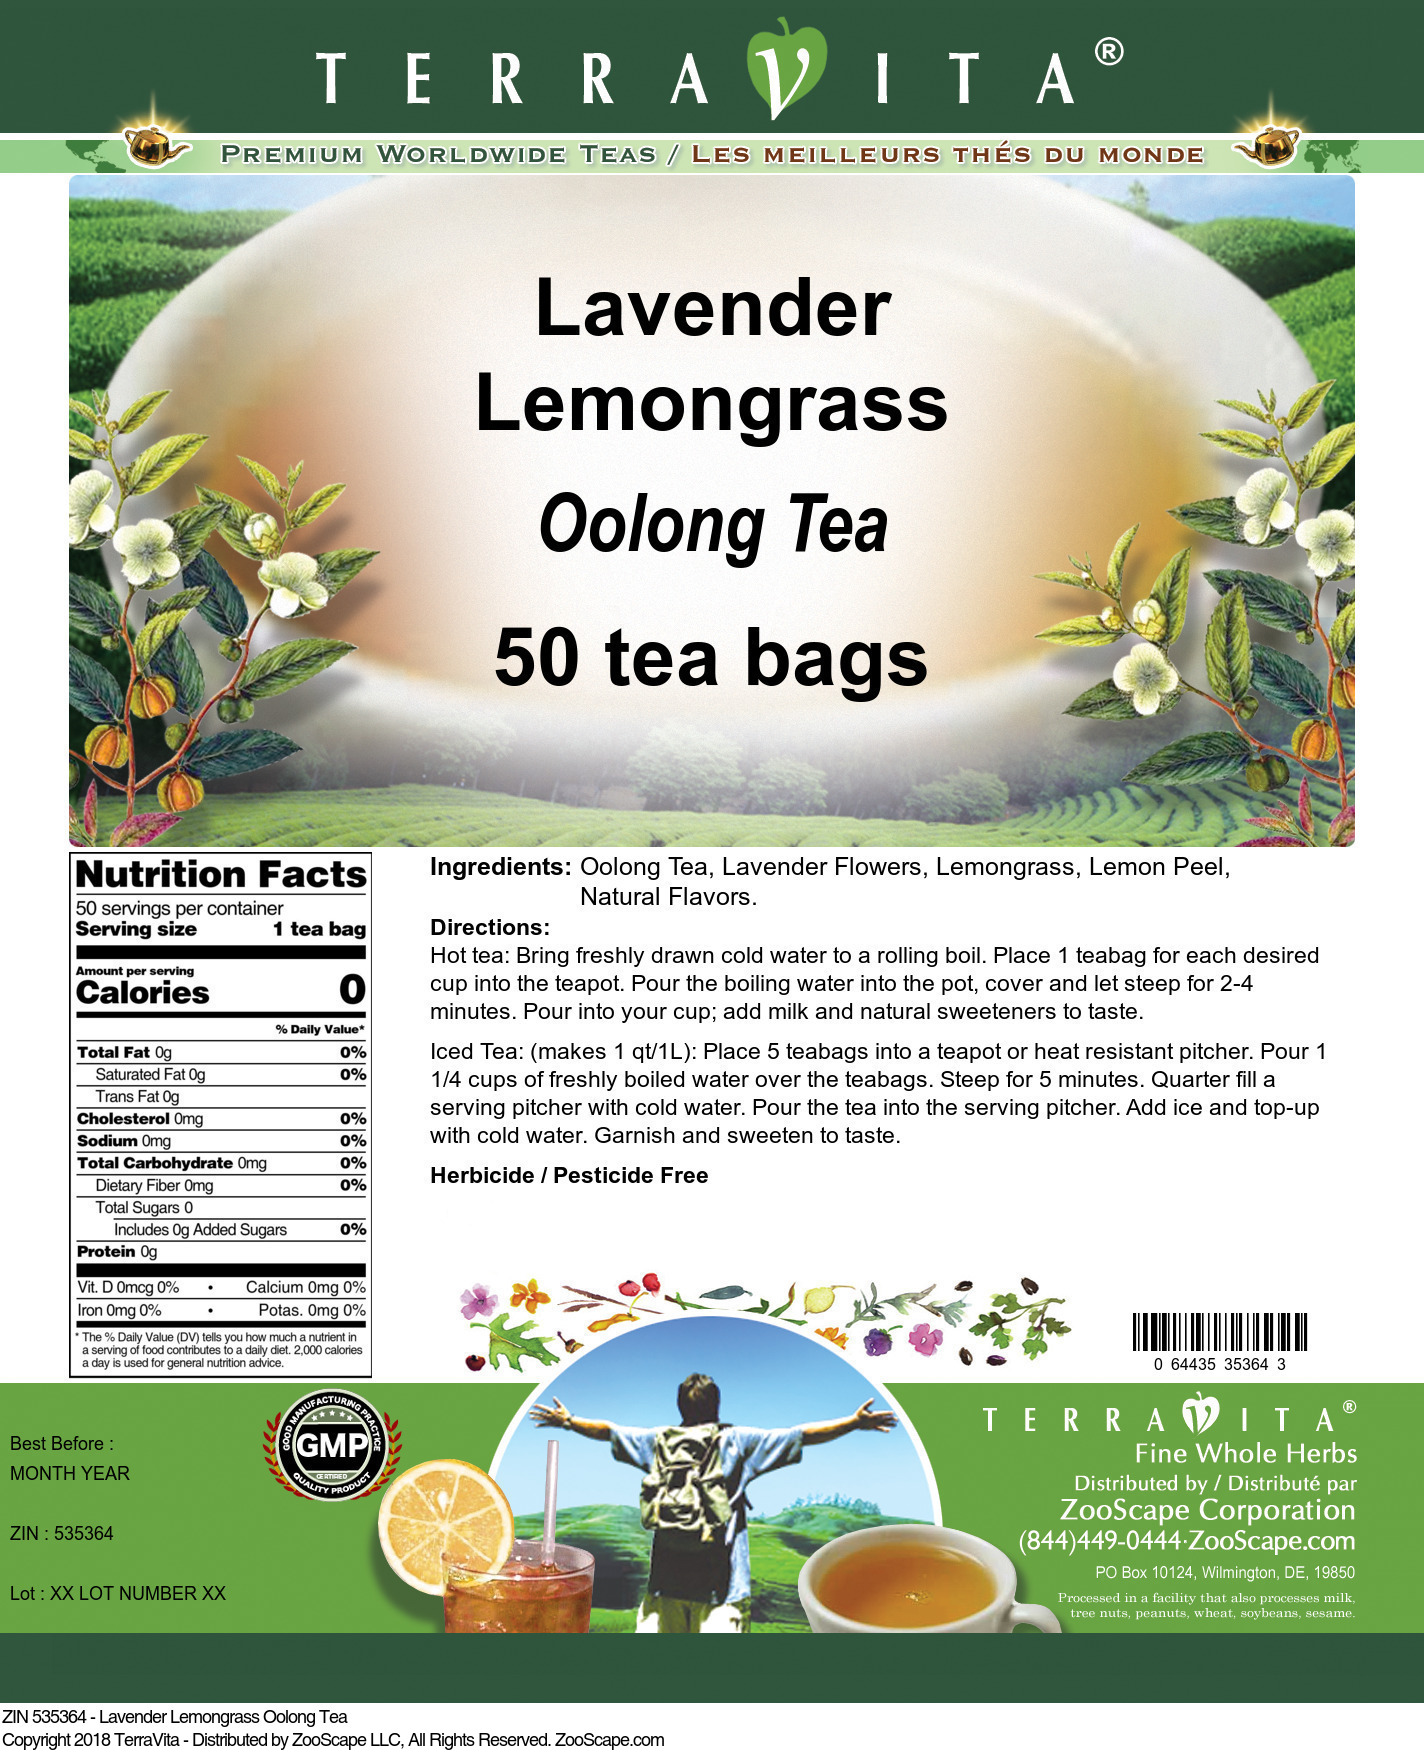 Lavender Lemongrass Oolong Tea - Label